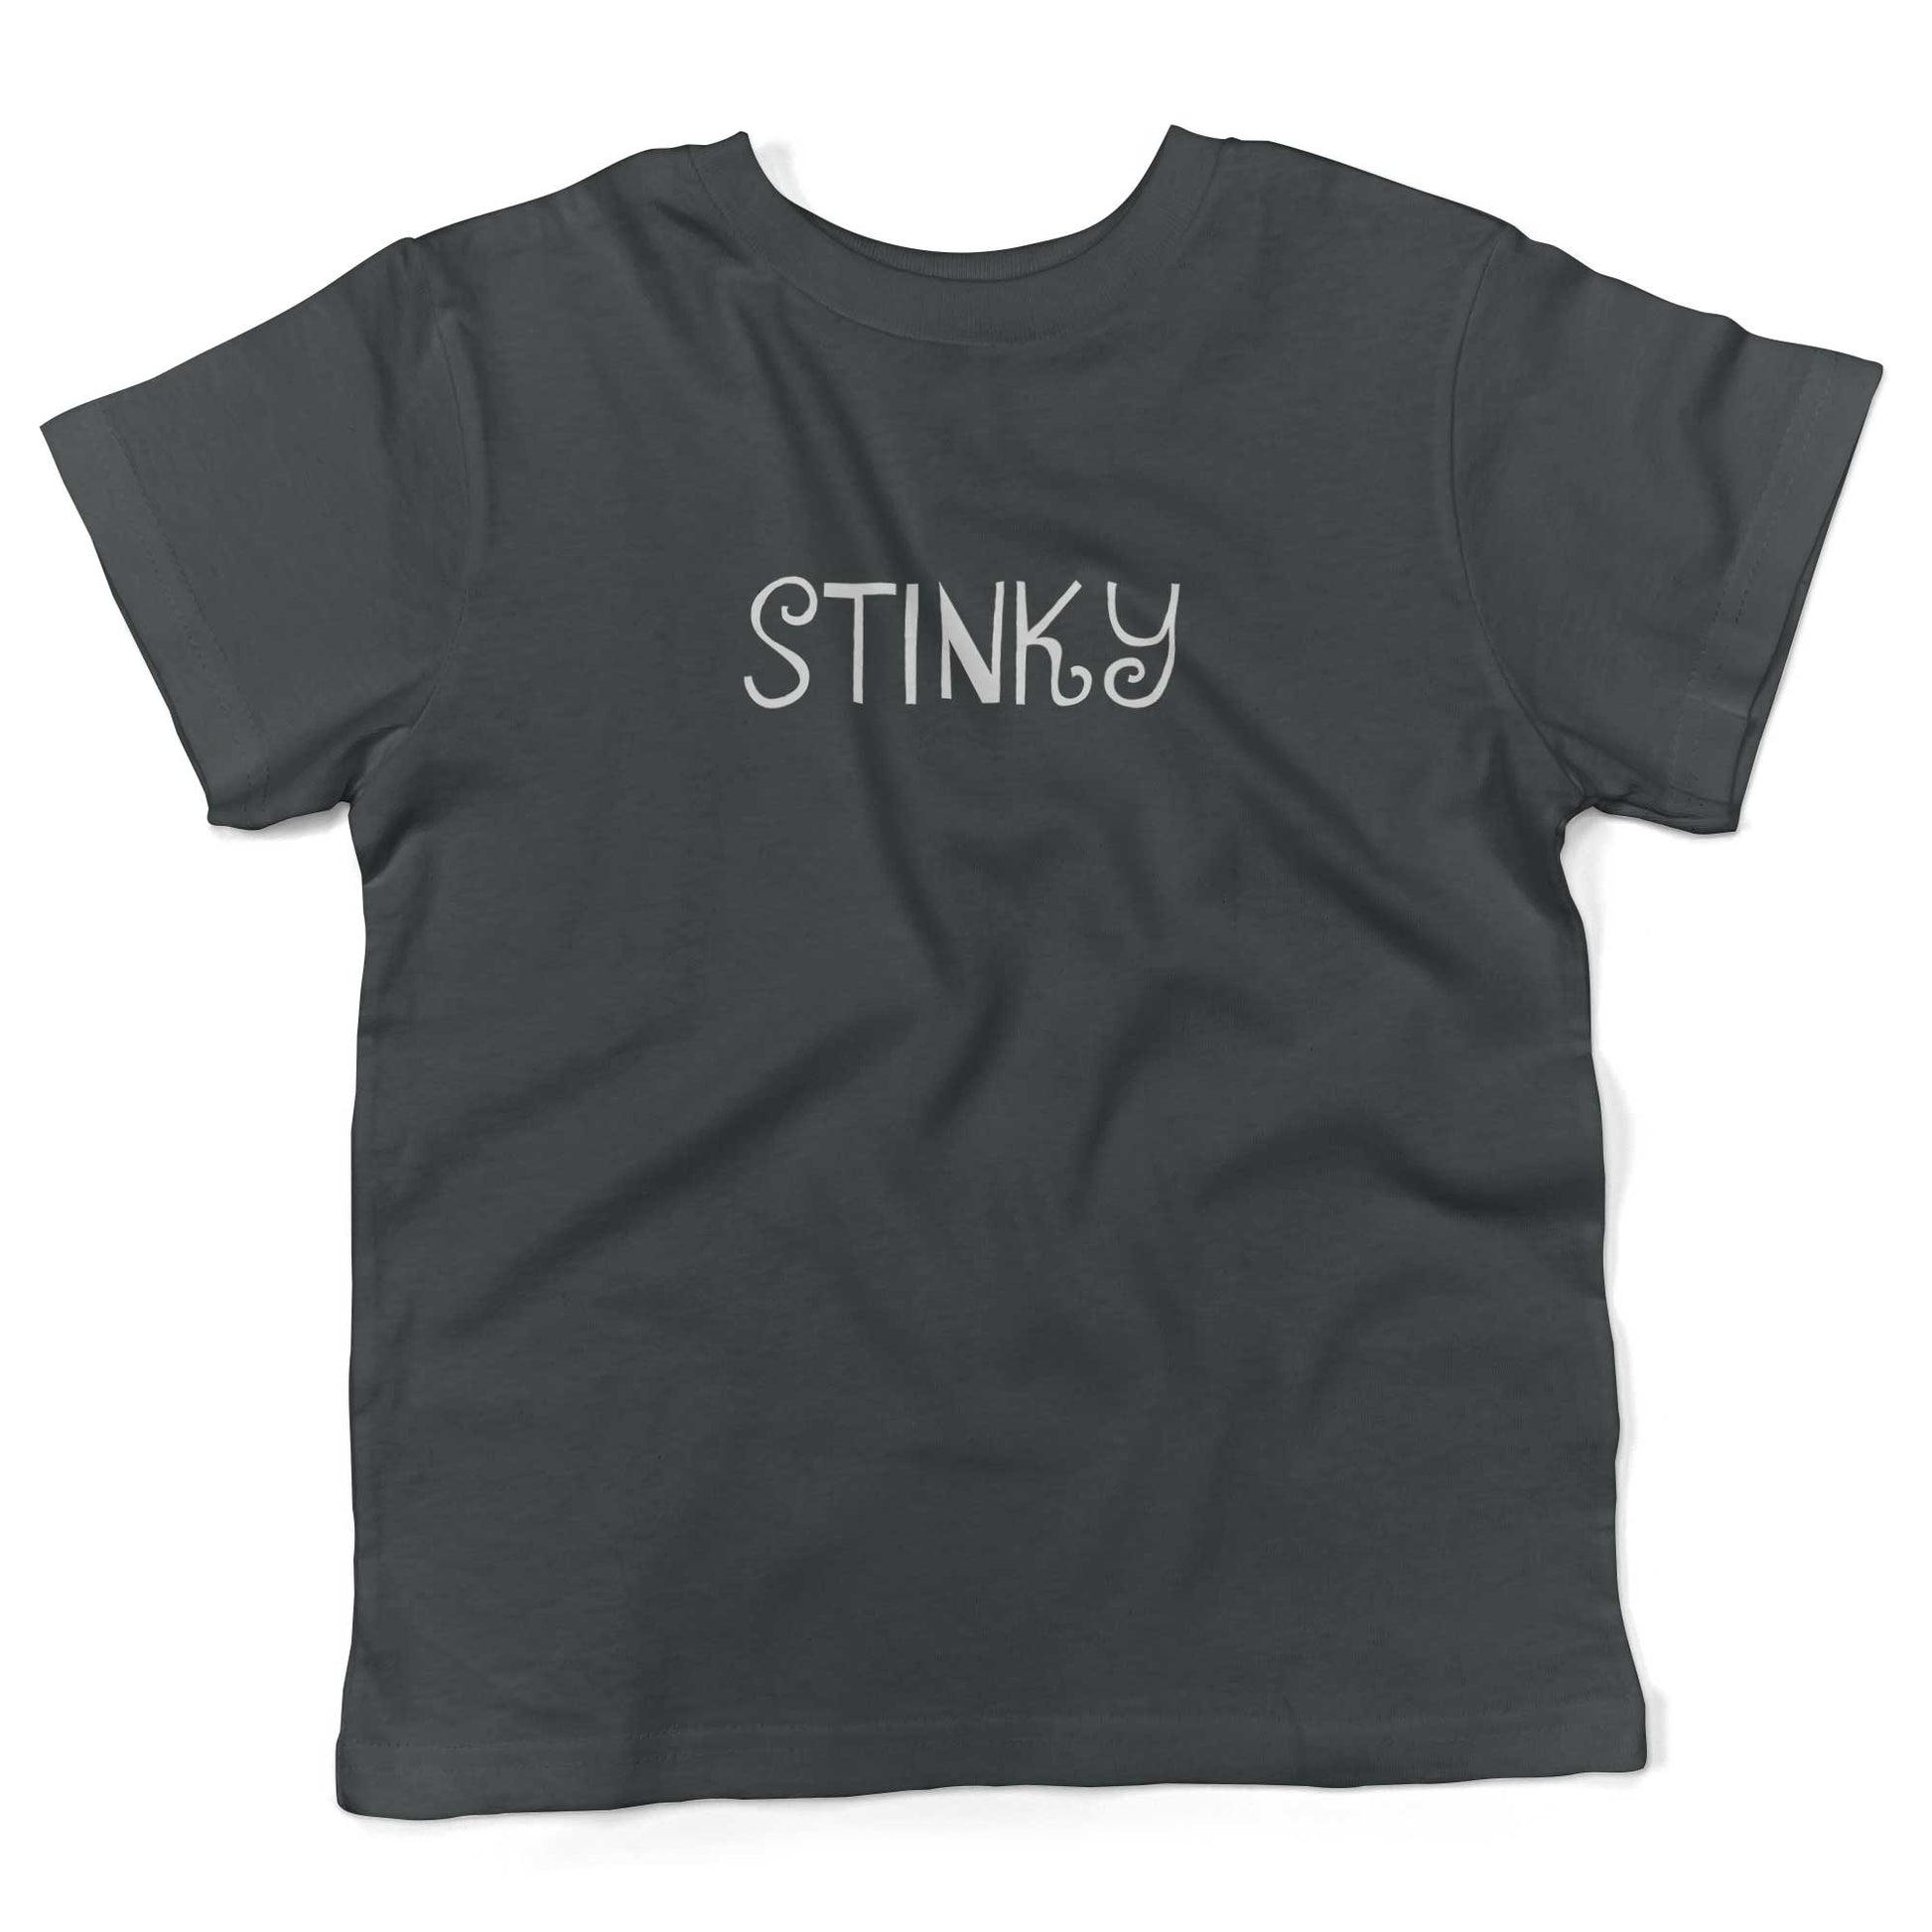 Stinky Toddler Shirt-Asphalt-2T